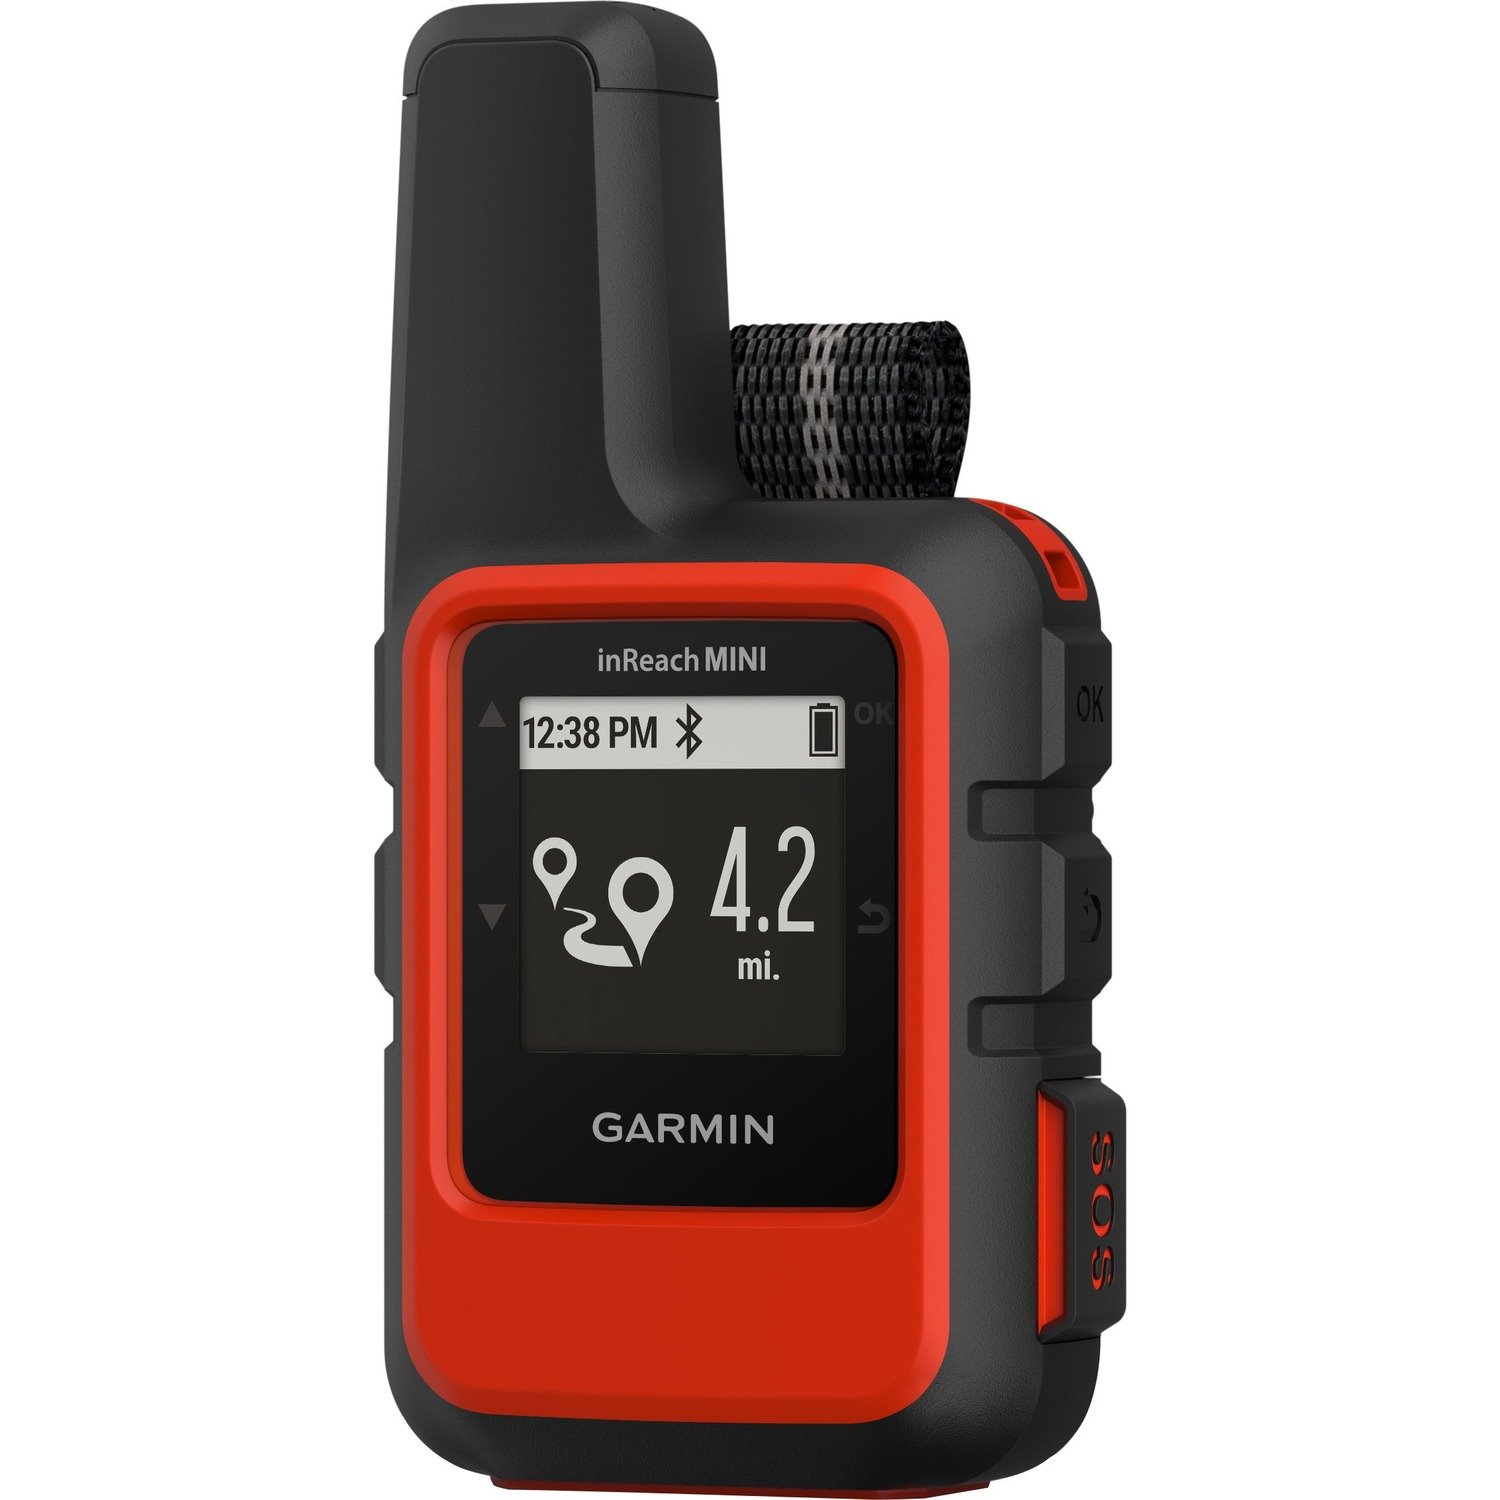 Garmin inReach Mini Handheld GPS Navigator - Orange - Handheld, Mountable